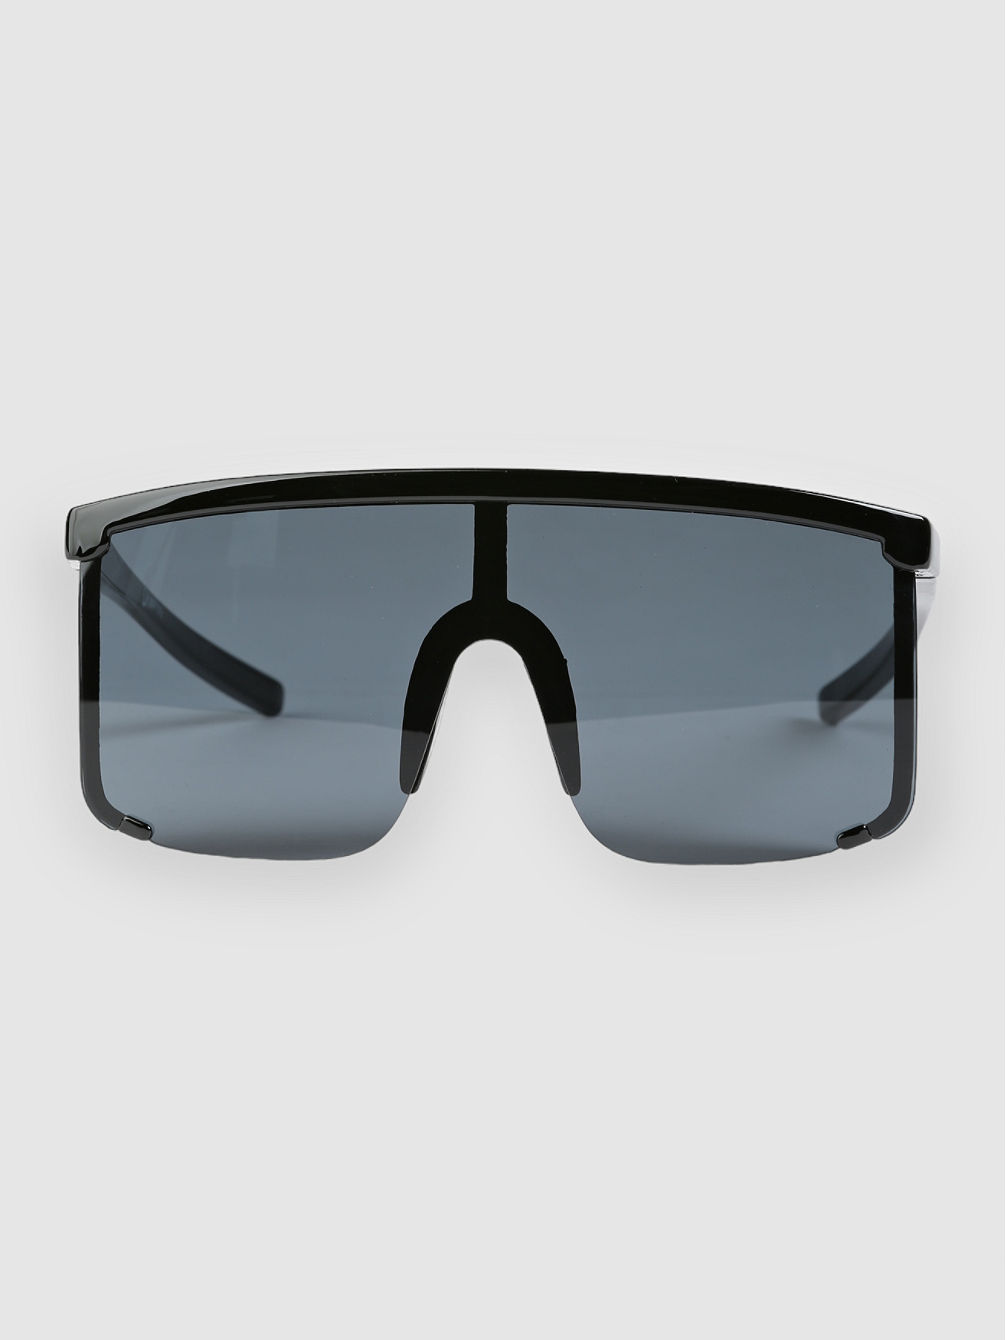 Starship Black Sunglasses